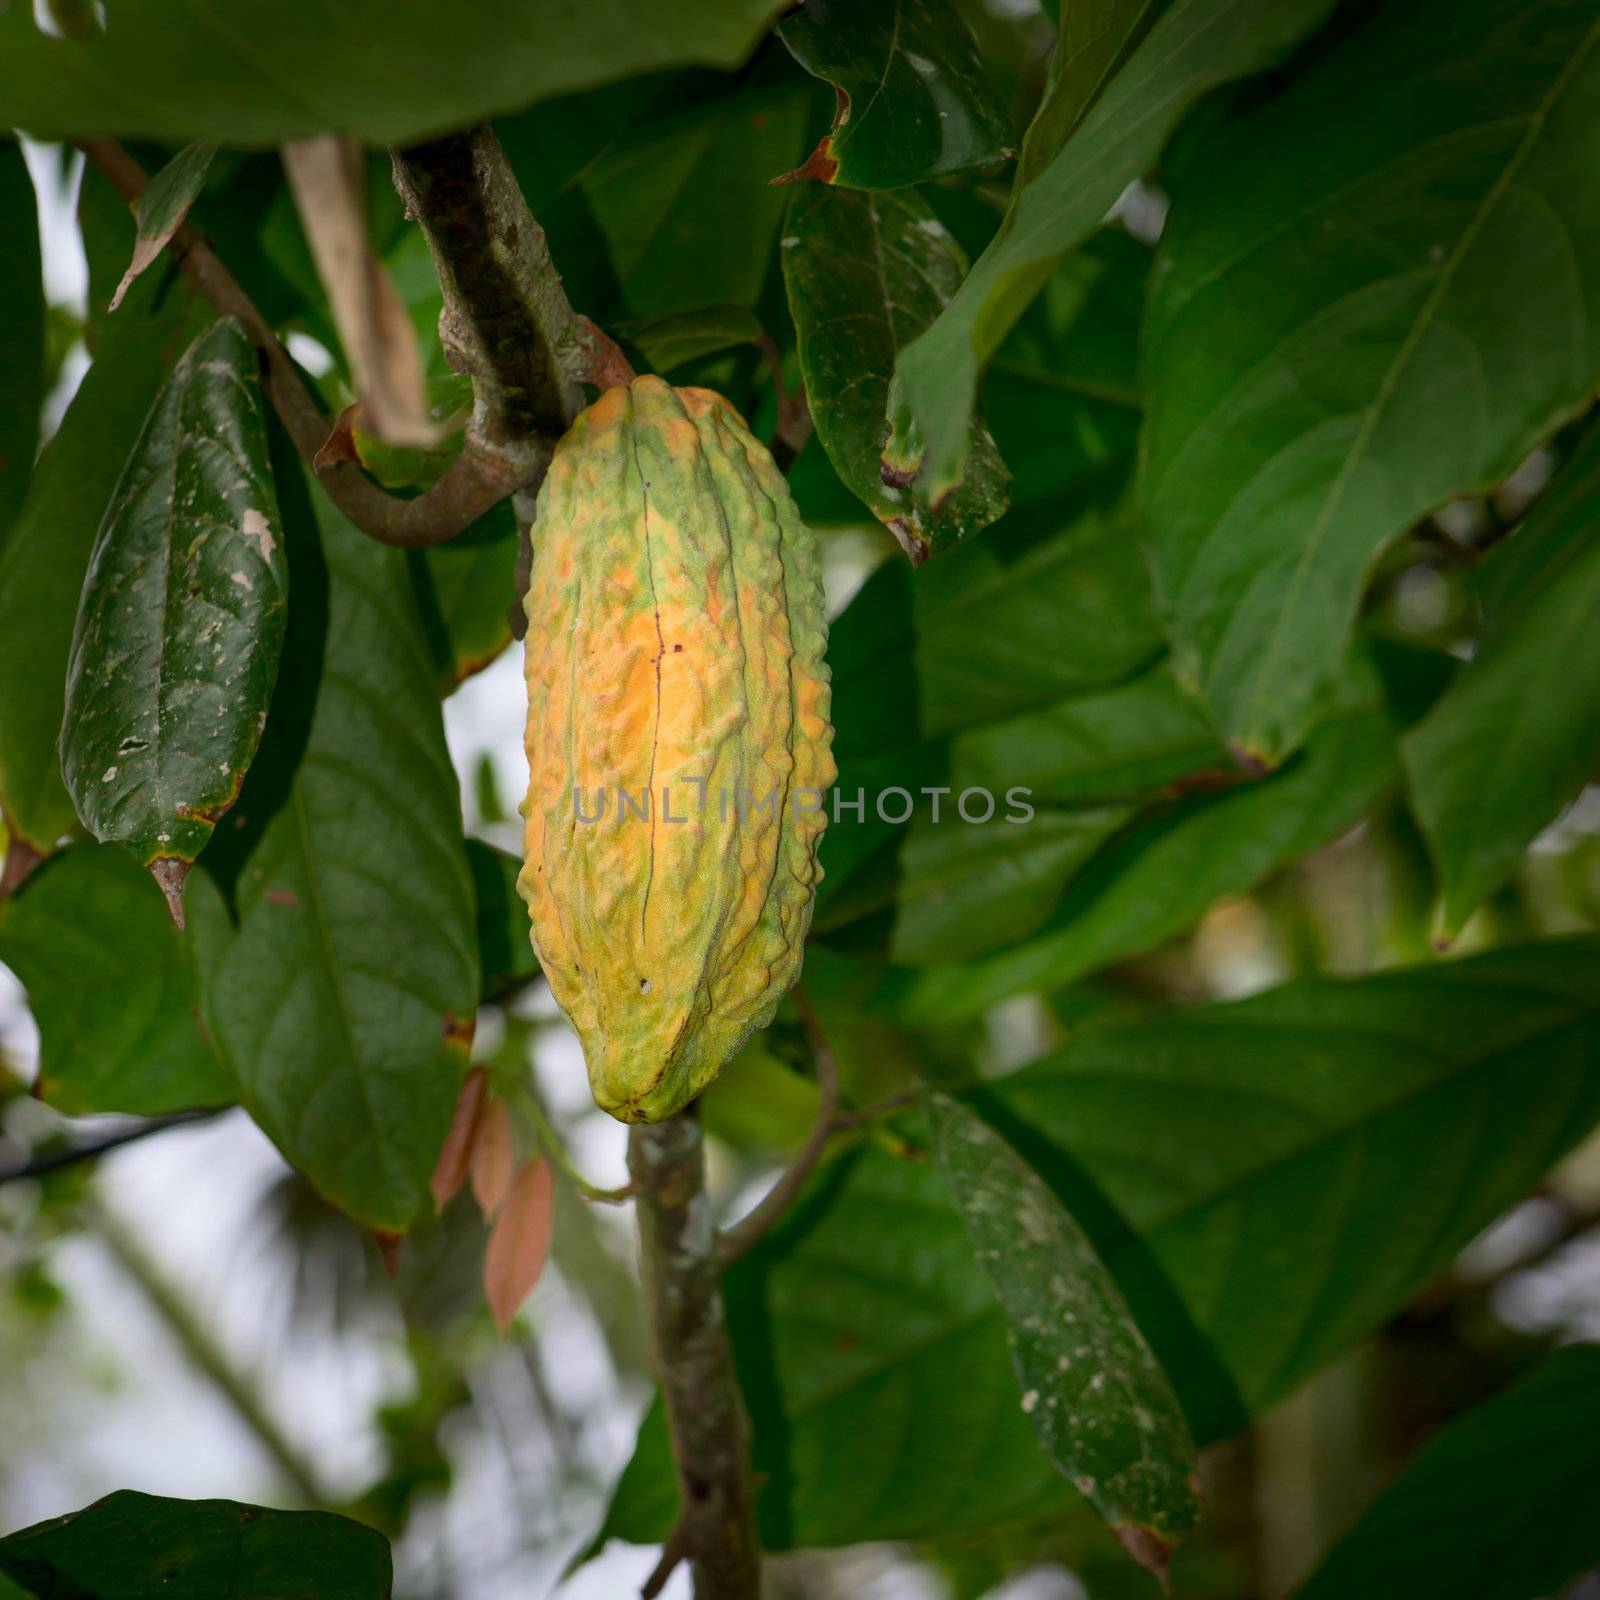 Cocoa tree (chocolate tree) with yellow pod, Bali island, Indonesia 